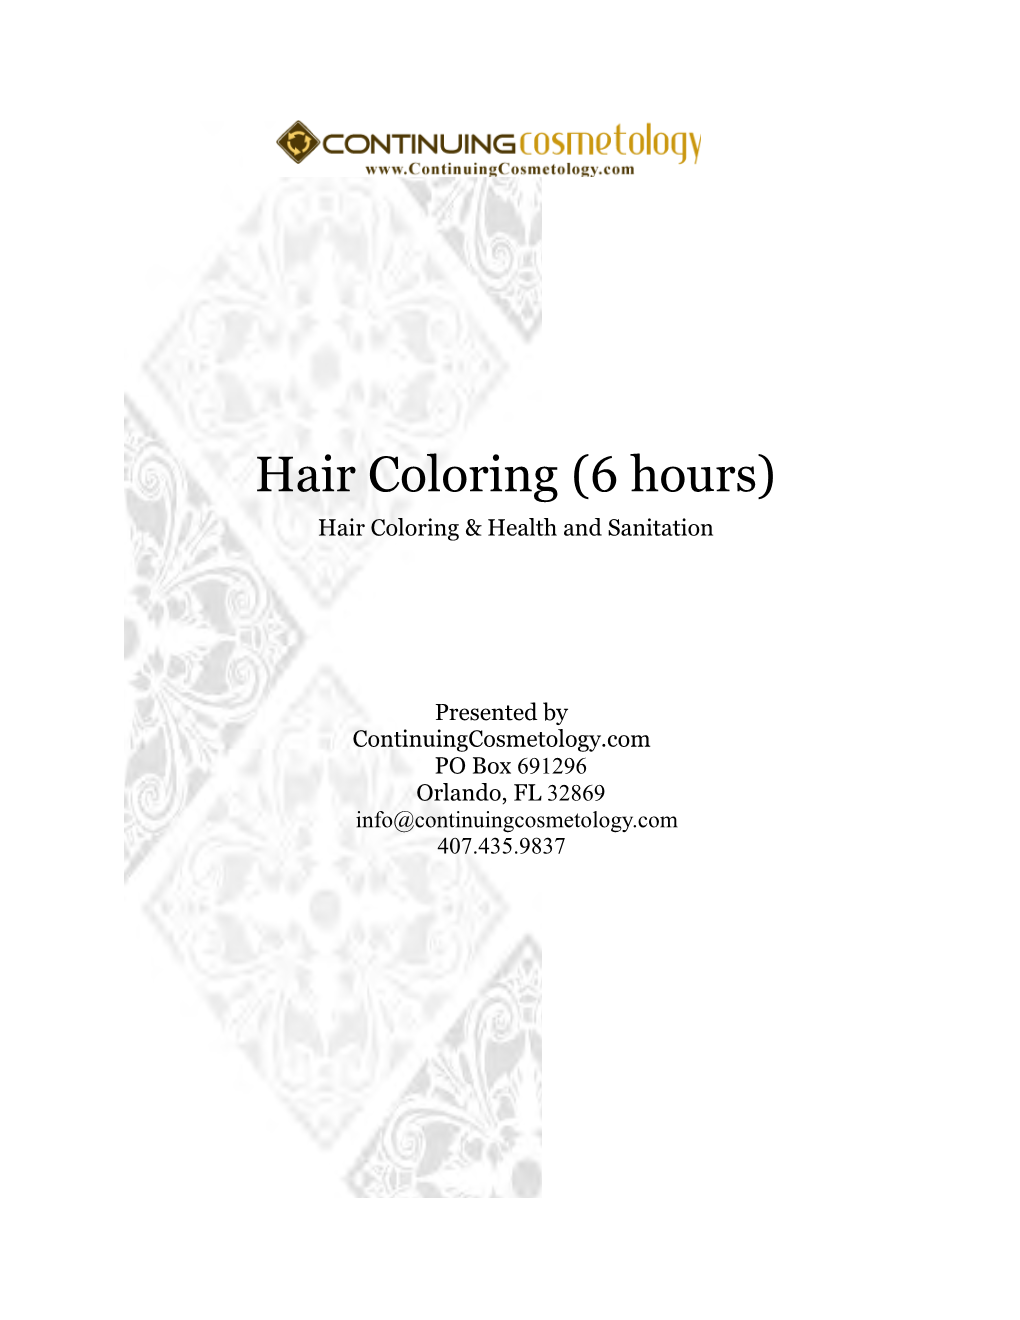 Hair Coloring (6 Hours) Hair Coloring & Health and Sanitation